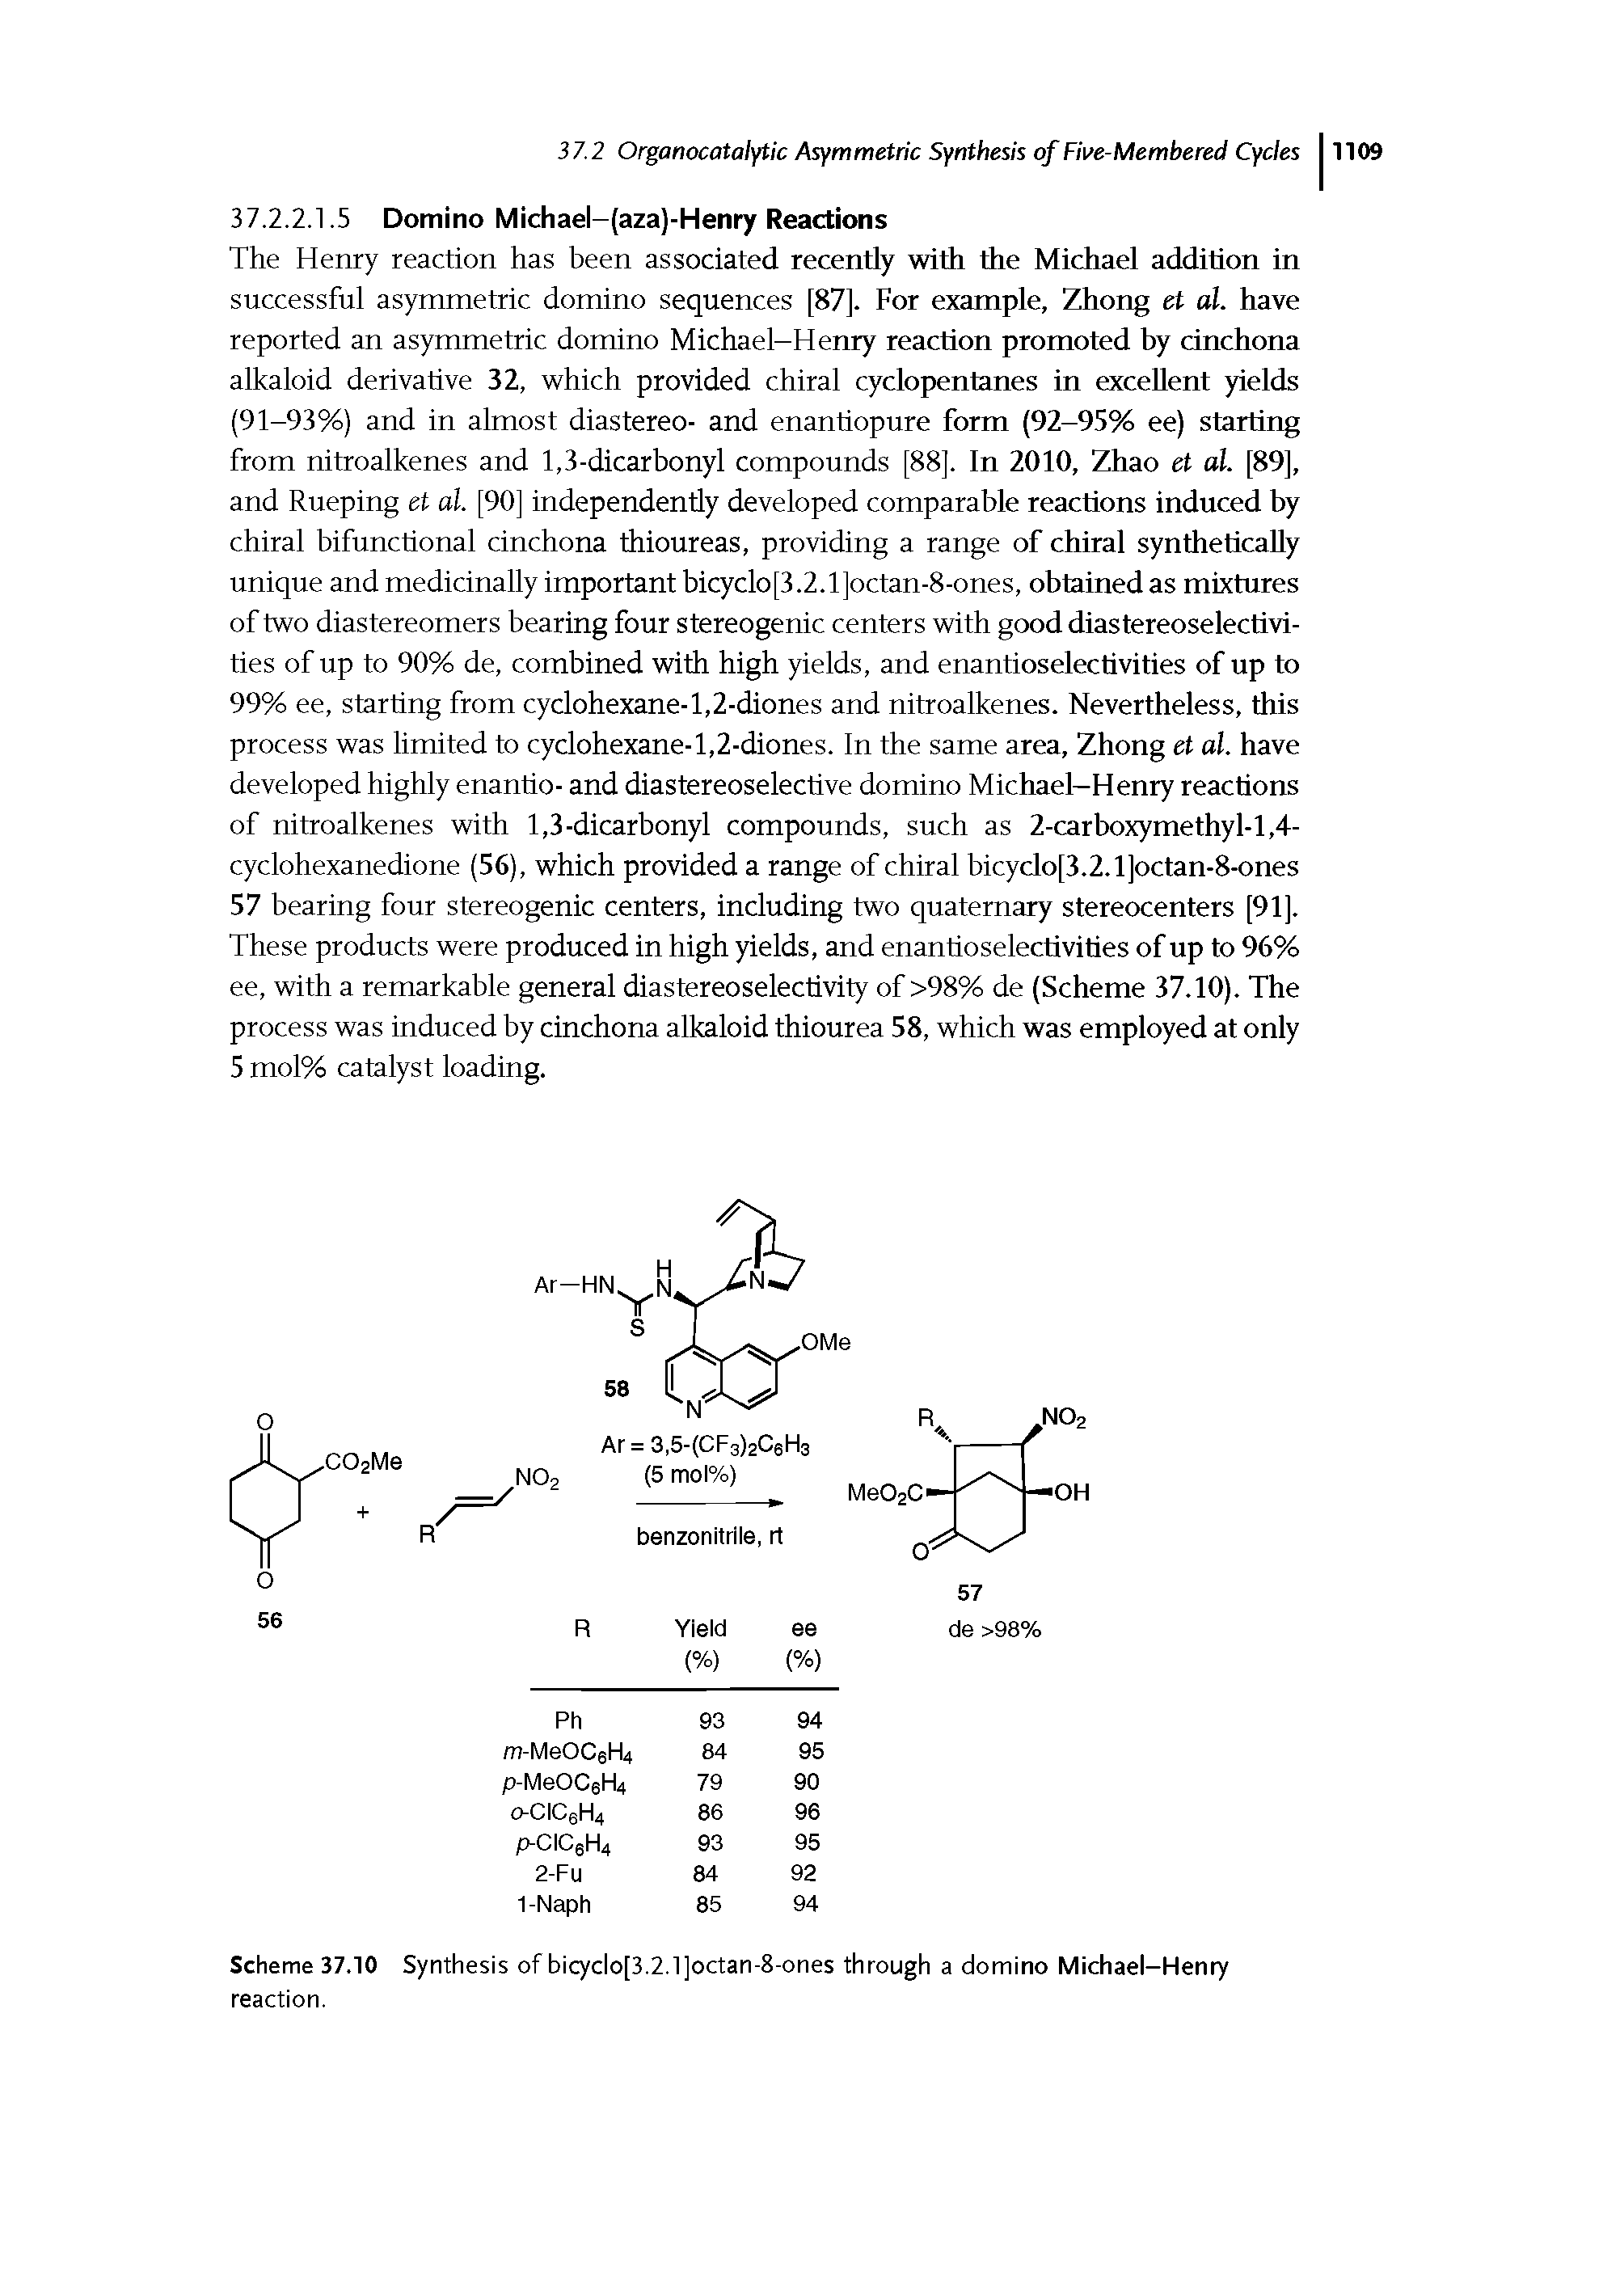 Scheme 37.10 Synthesis of biq clo[3.2.1]octan-8-ones through a domino Michael-Henry reaction.